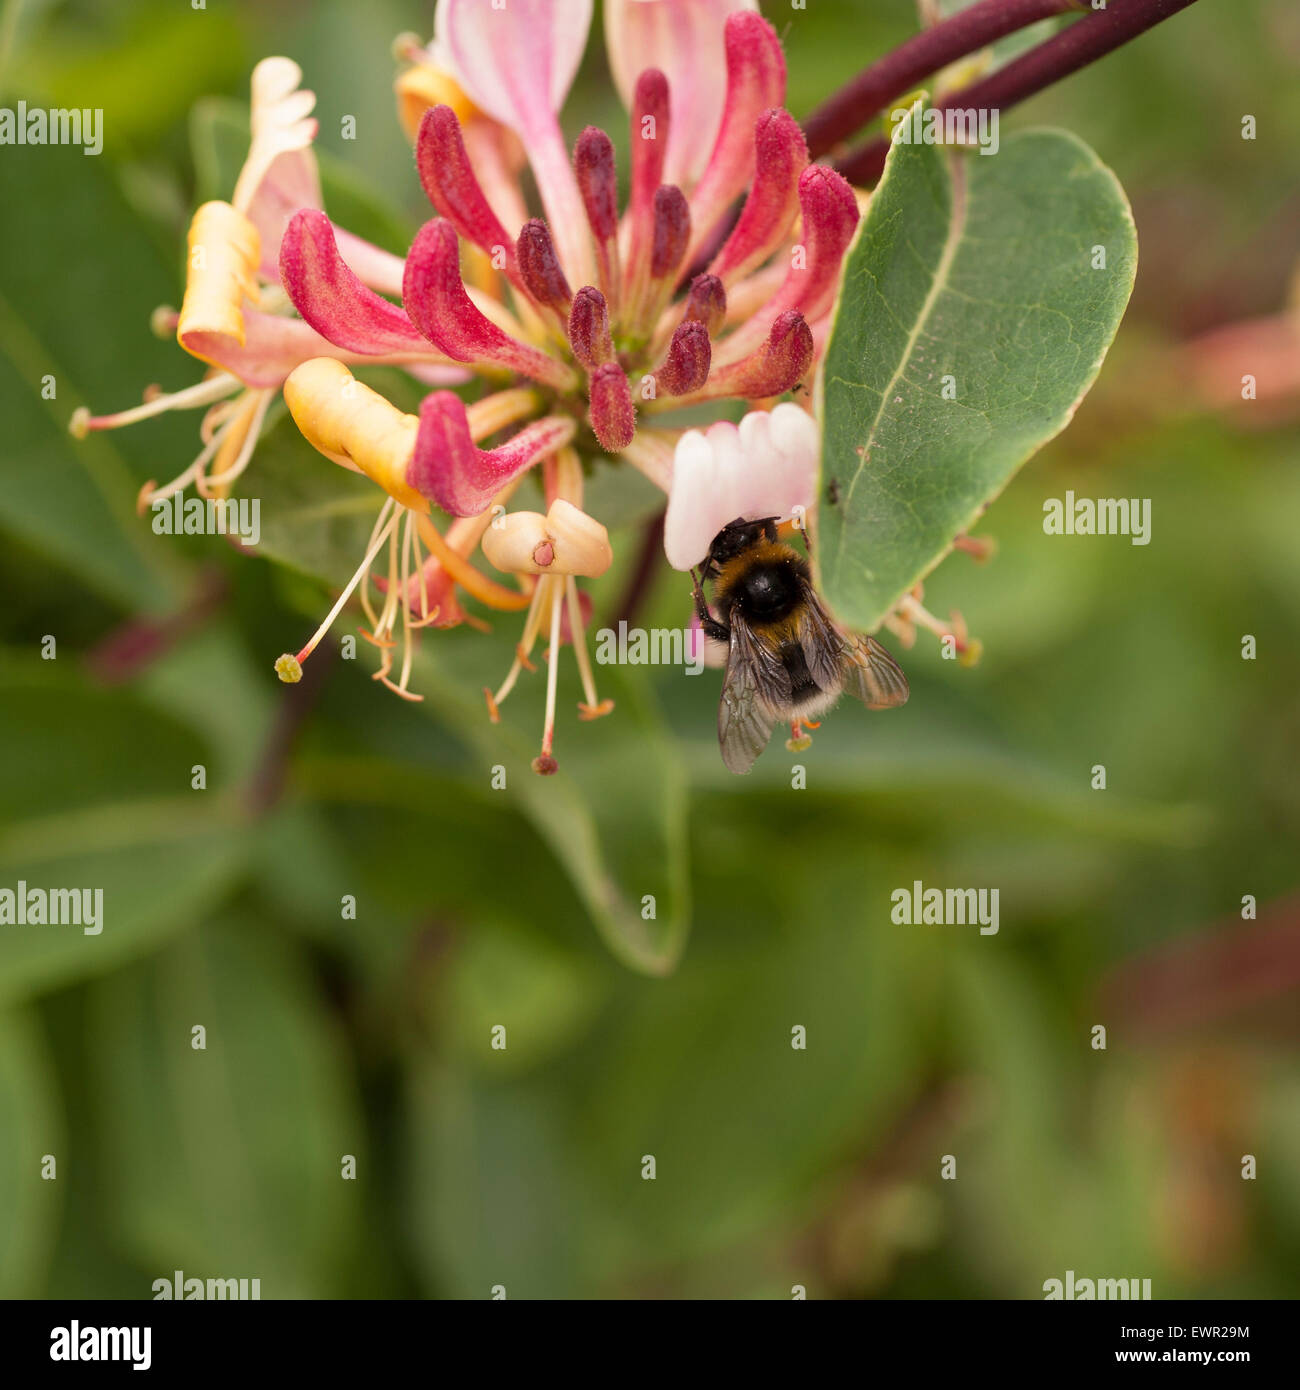 Close-up of honey bee feeding on honey suckle flower.Taken in garden in summer sunchine. Stock Photo